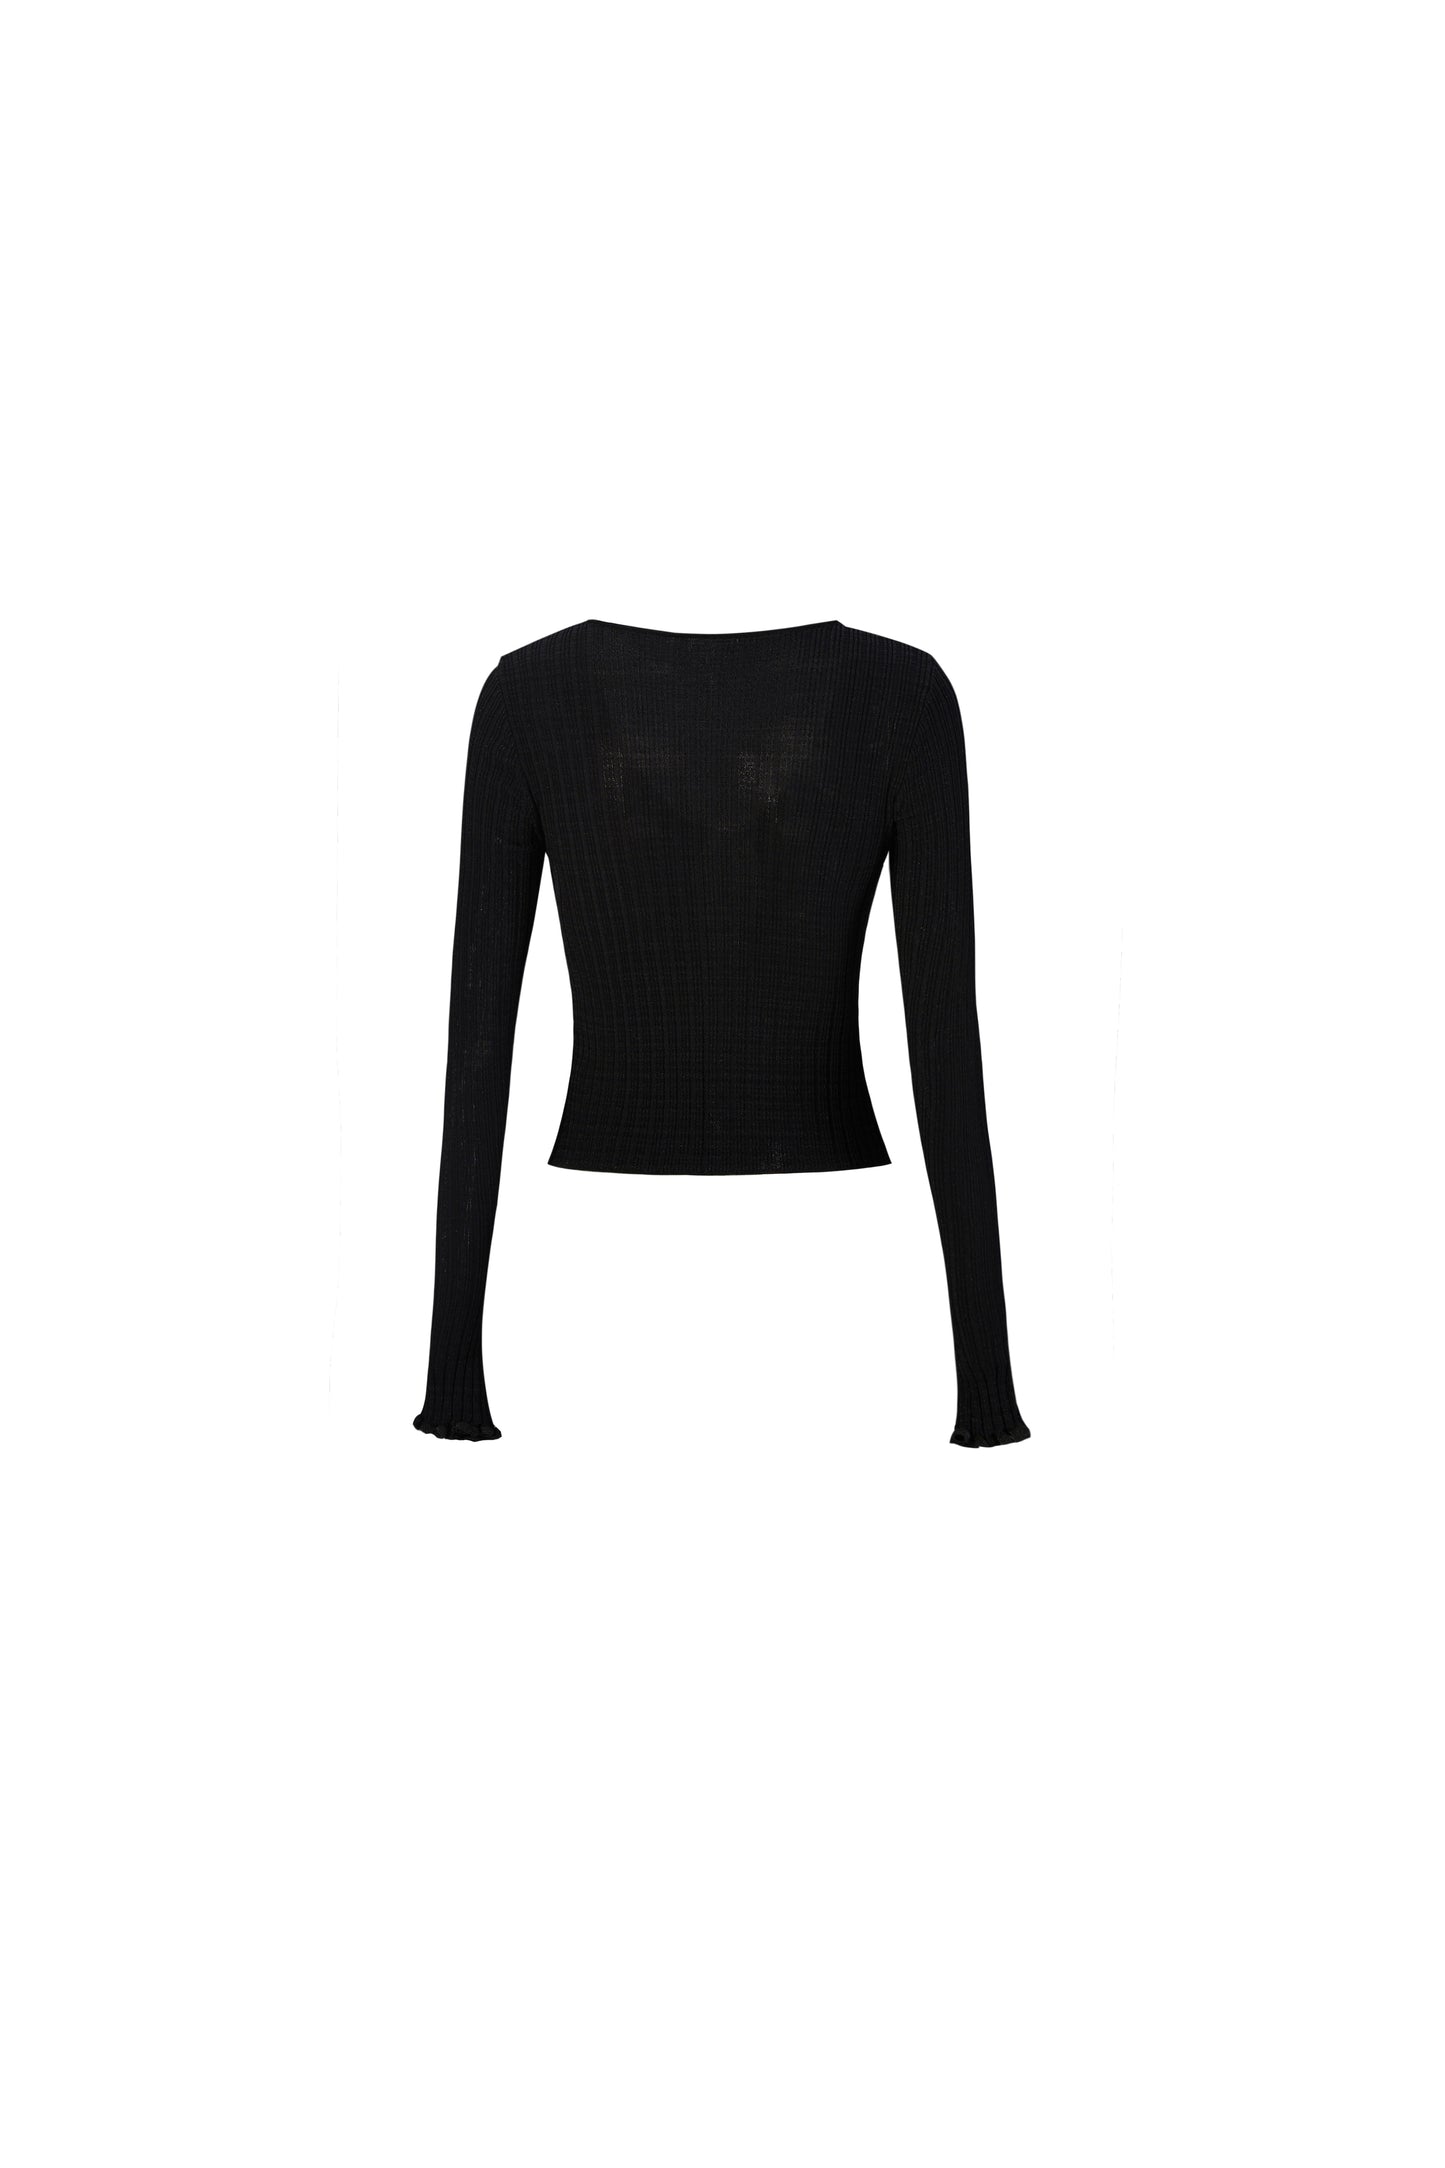 Annabella Knit Cardigan (Black) (Final Sale)